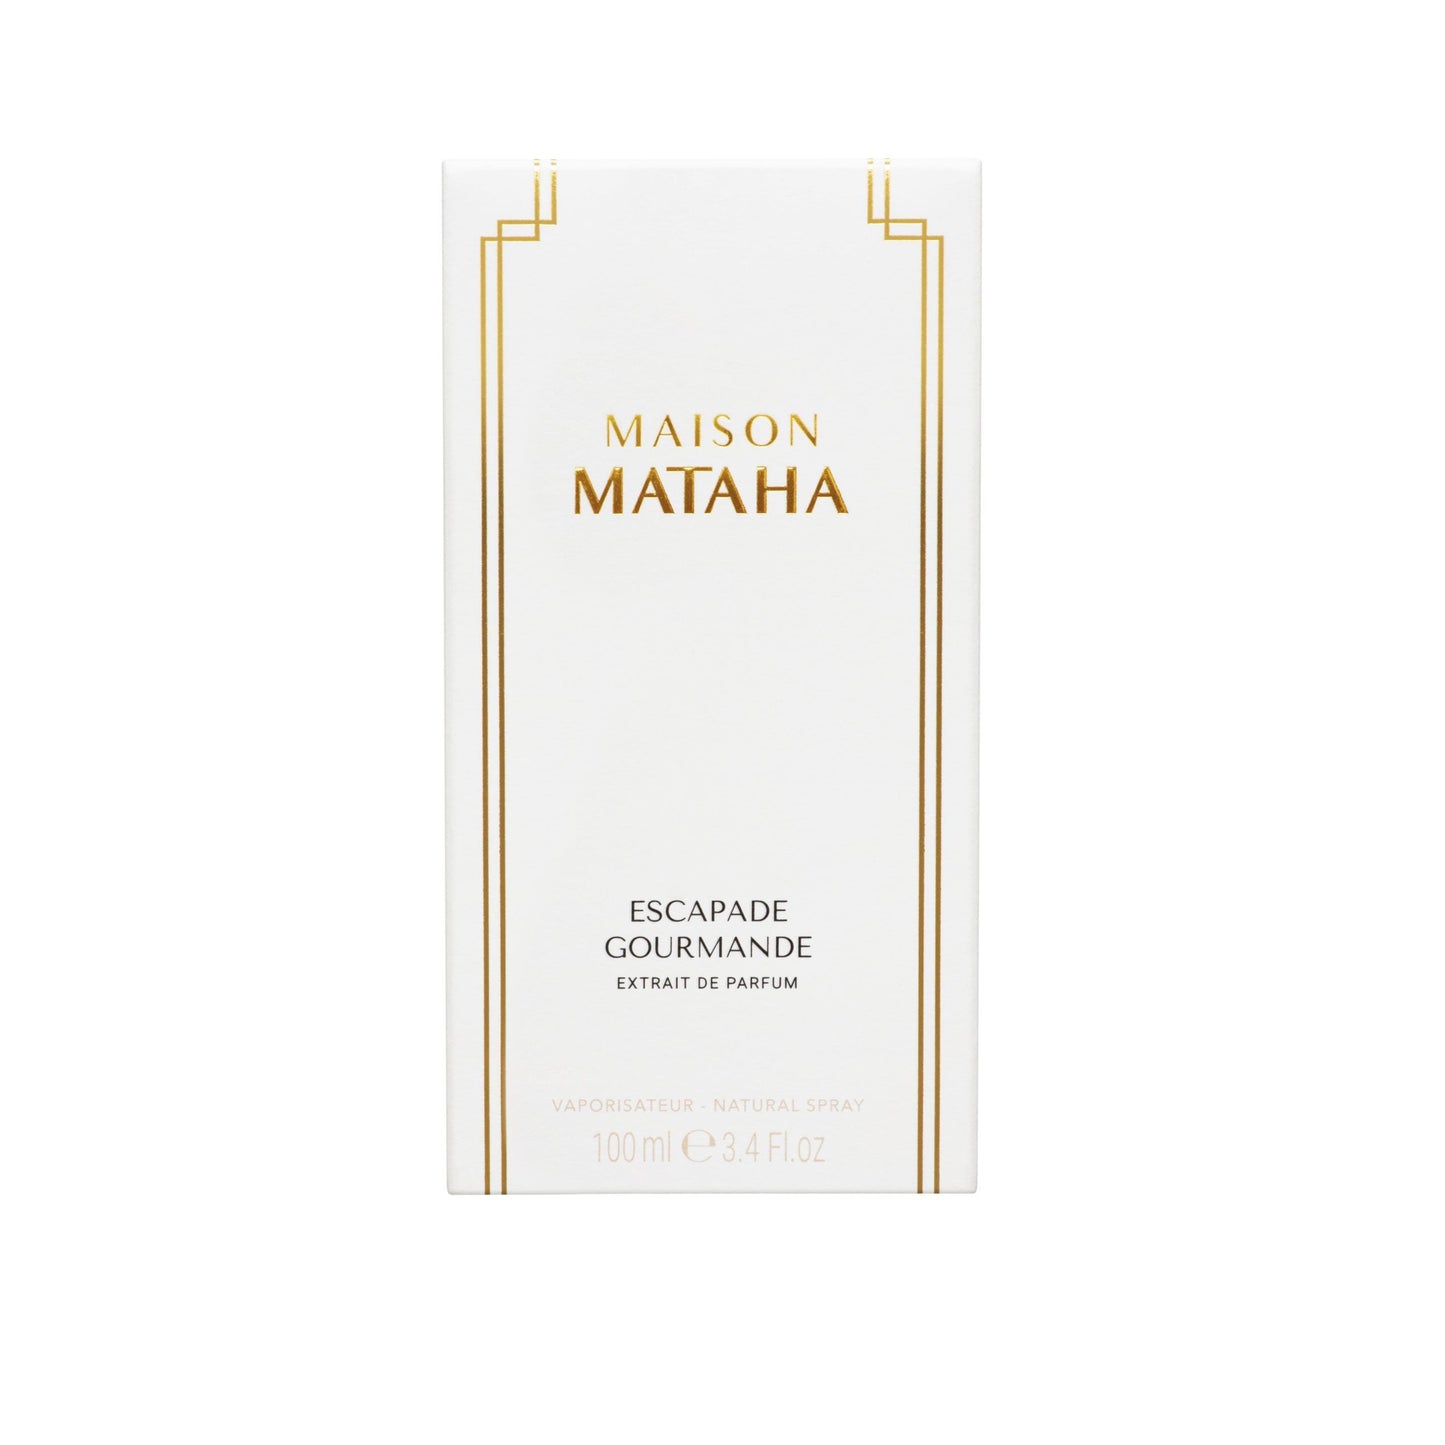 Escapade Gourmande Maison Mataha Extrait de Parfum Sample 2ml